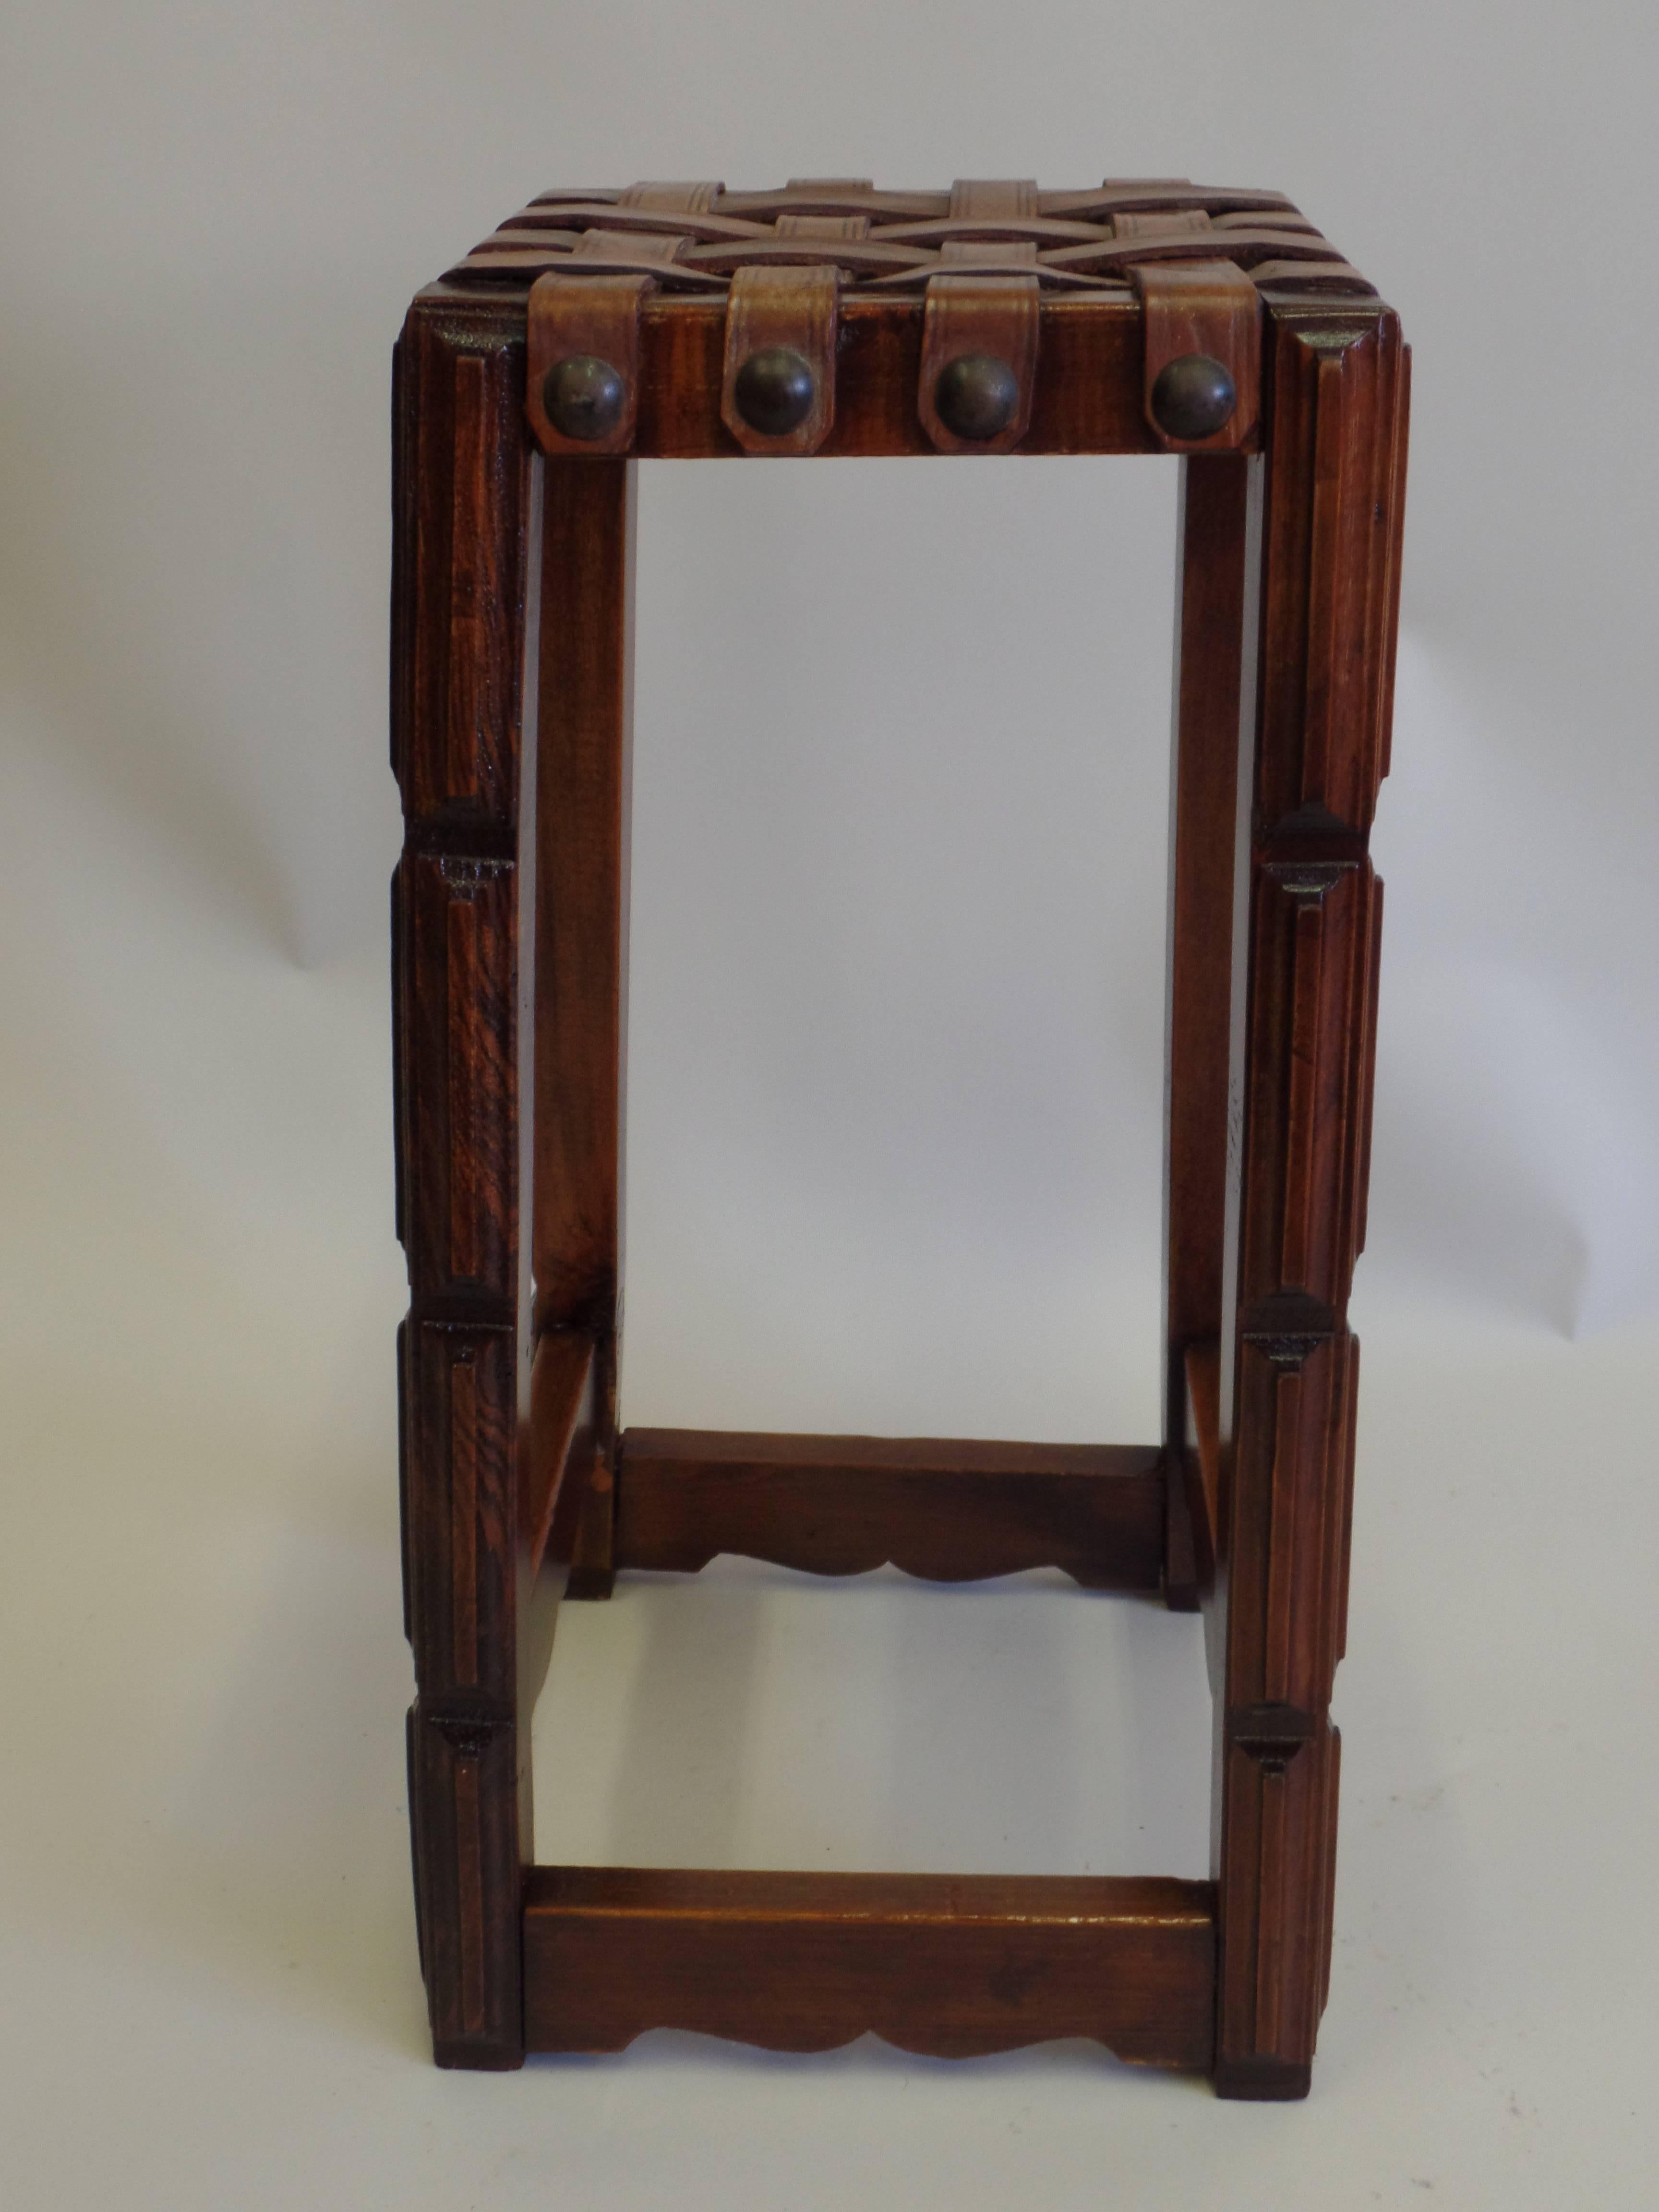 1940s bar stool